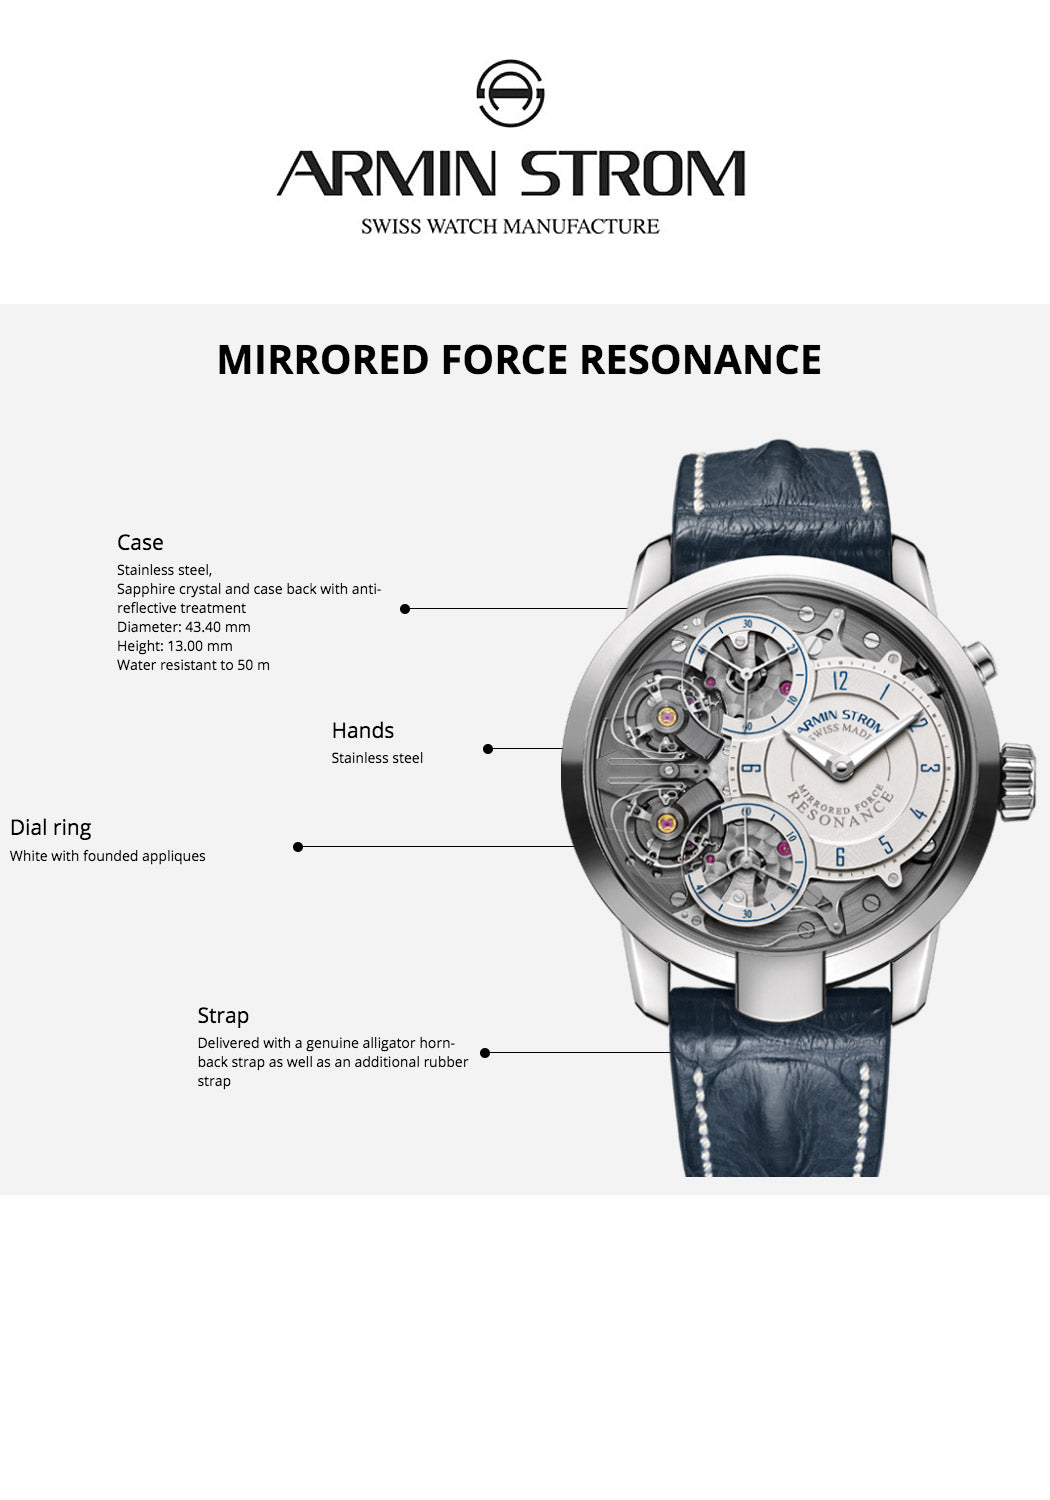 Armin Strom Mirrored Force Resonance | OsterJewelers.com